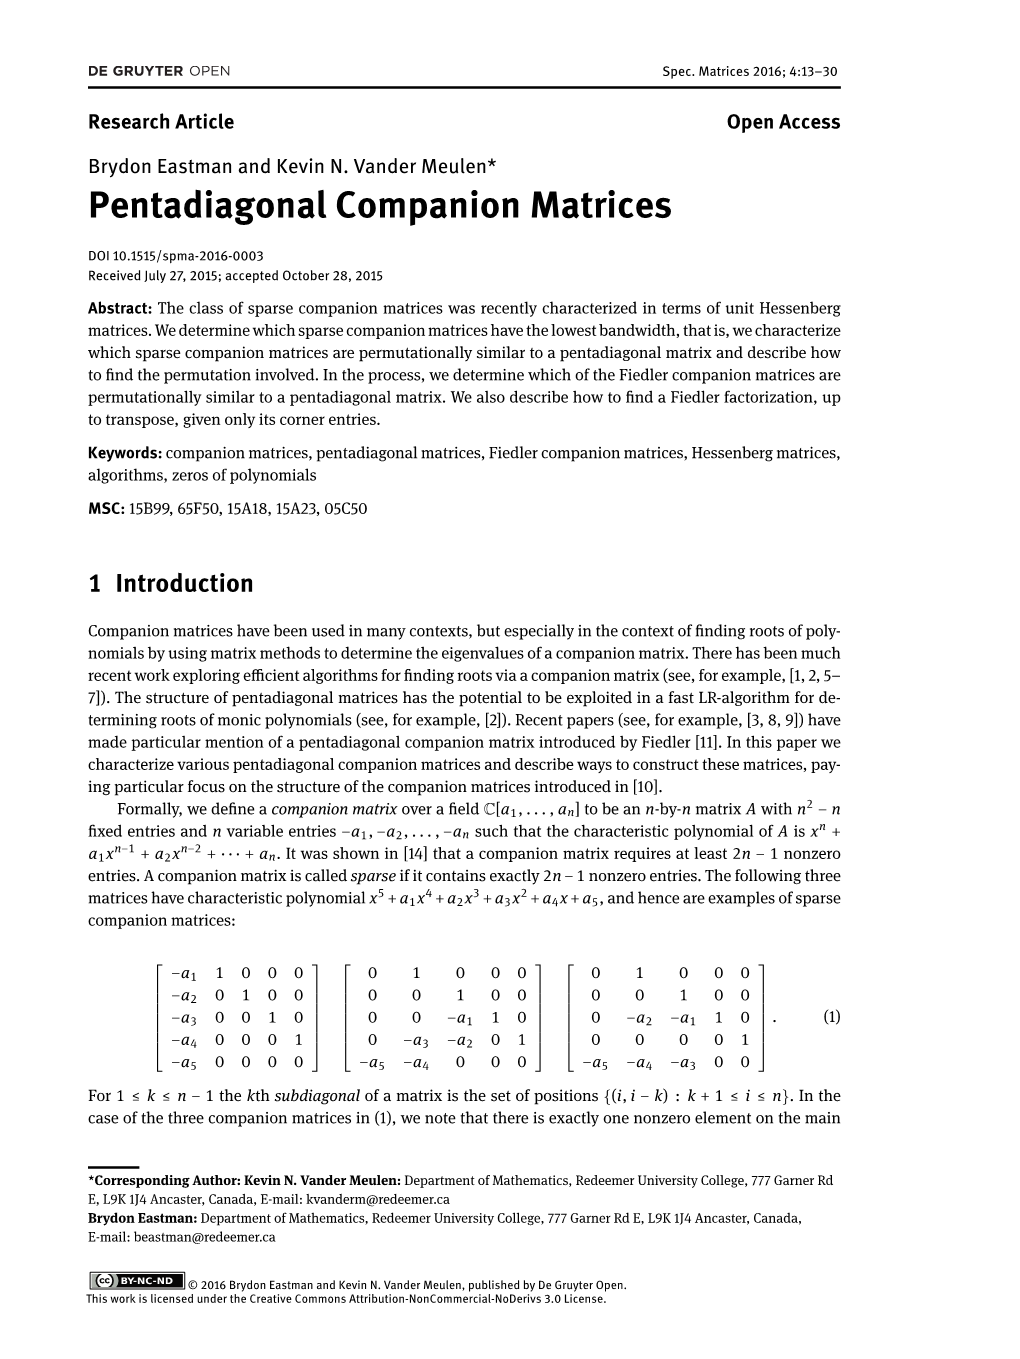 Pentadiagonal Companion Matrices